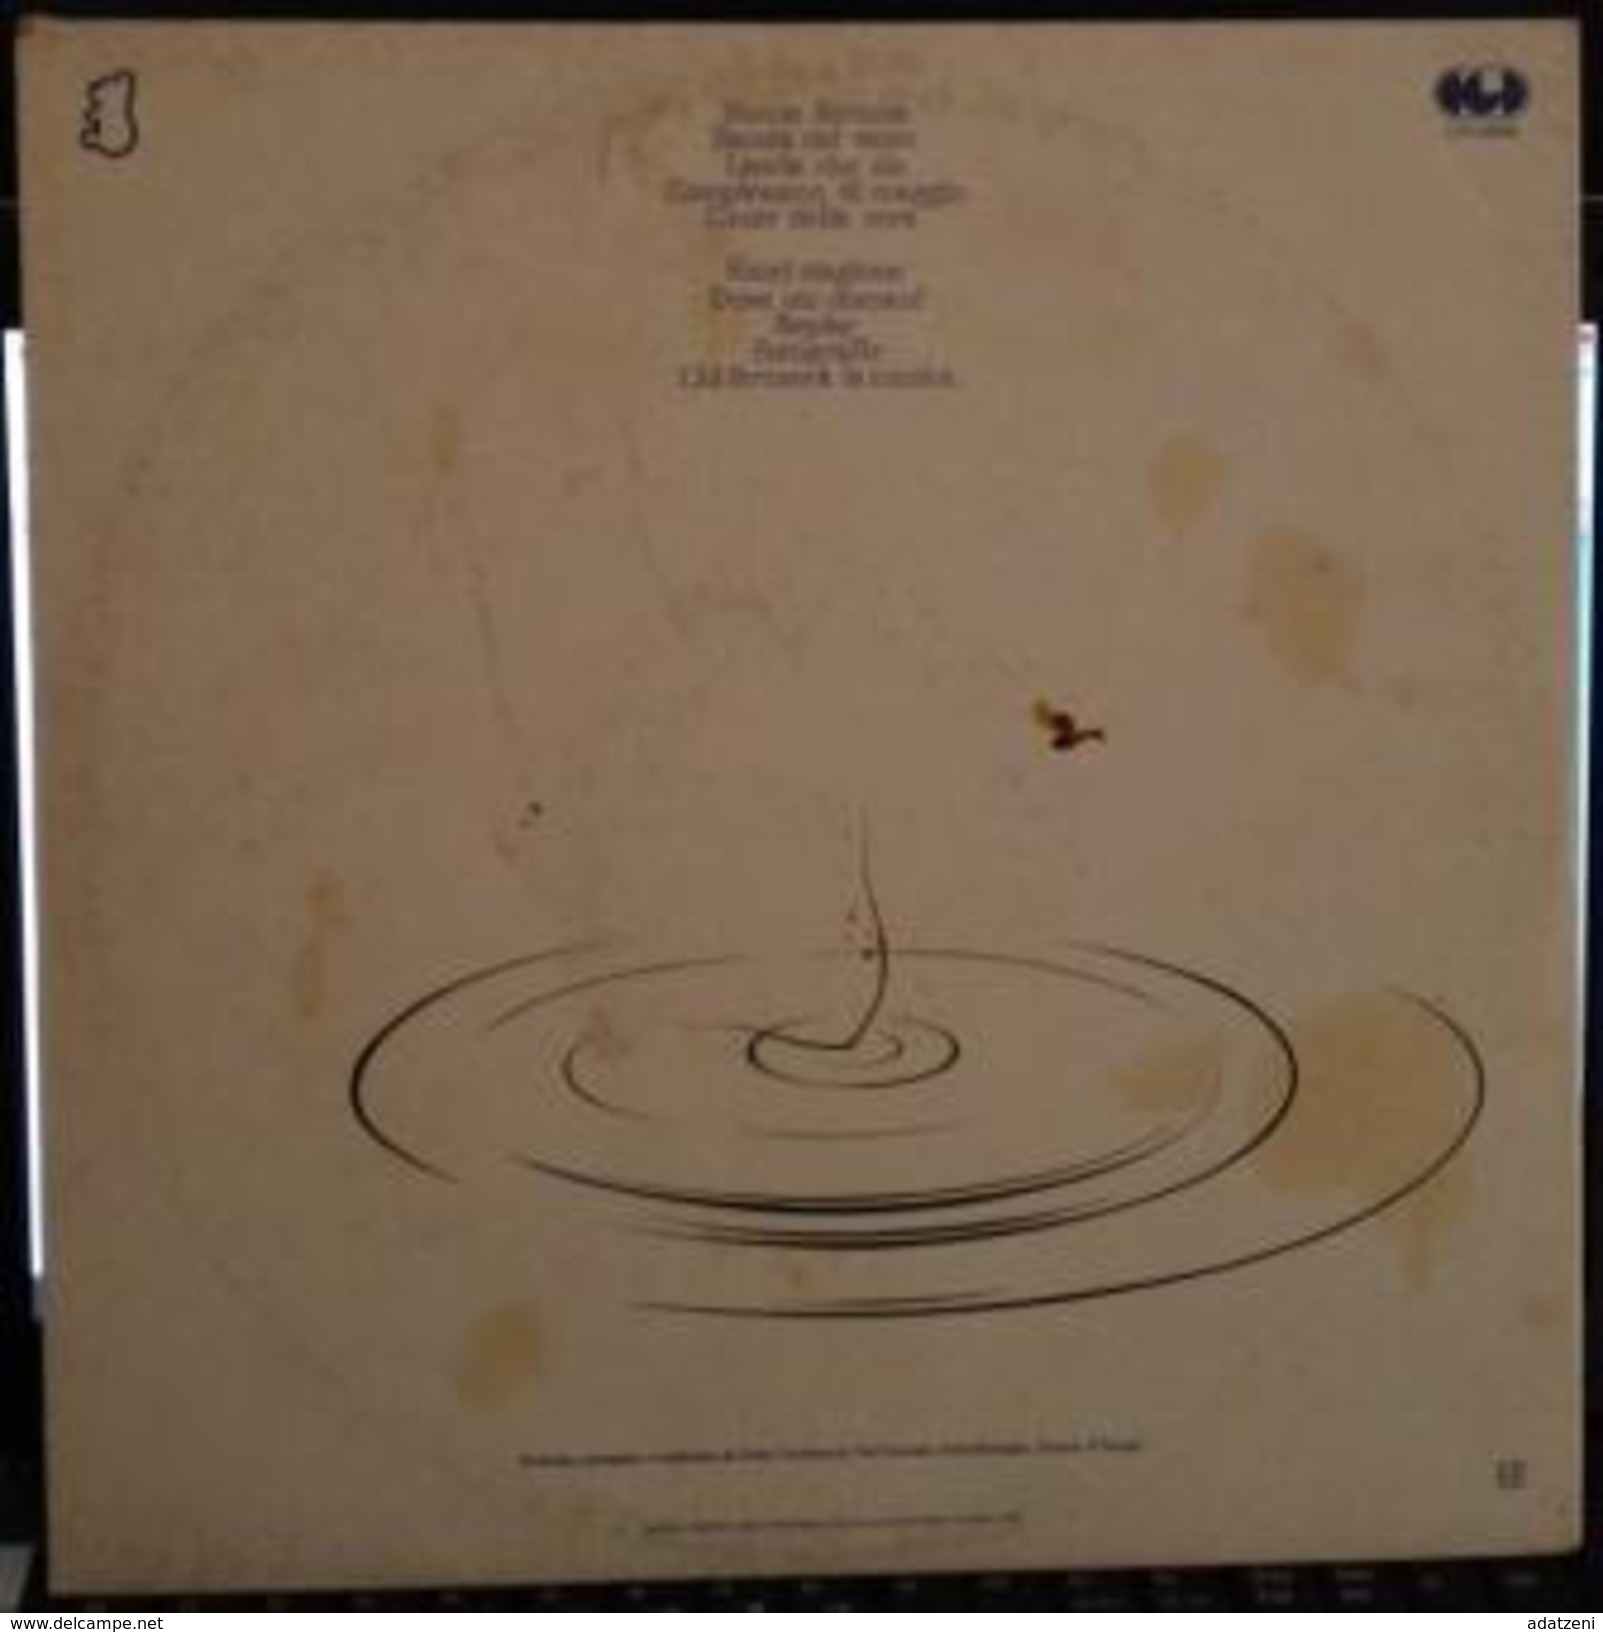 LP –BUONA FORTUNA 1981 POOH - Other - Italian Music